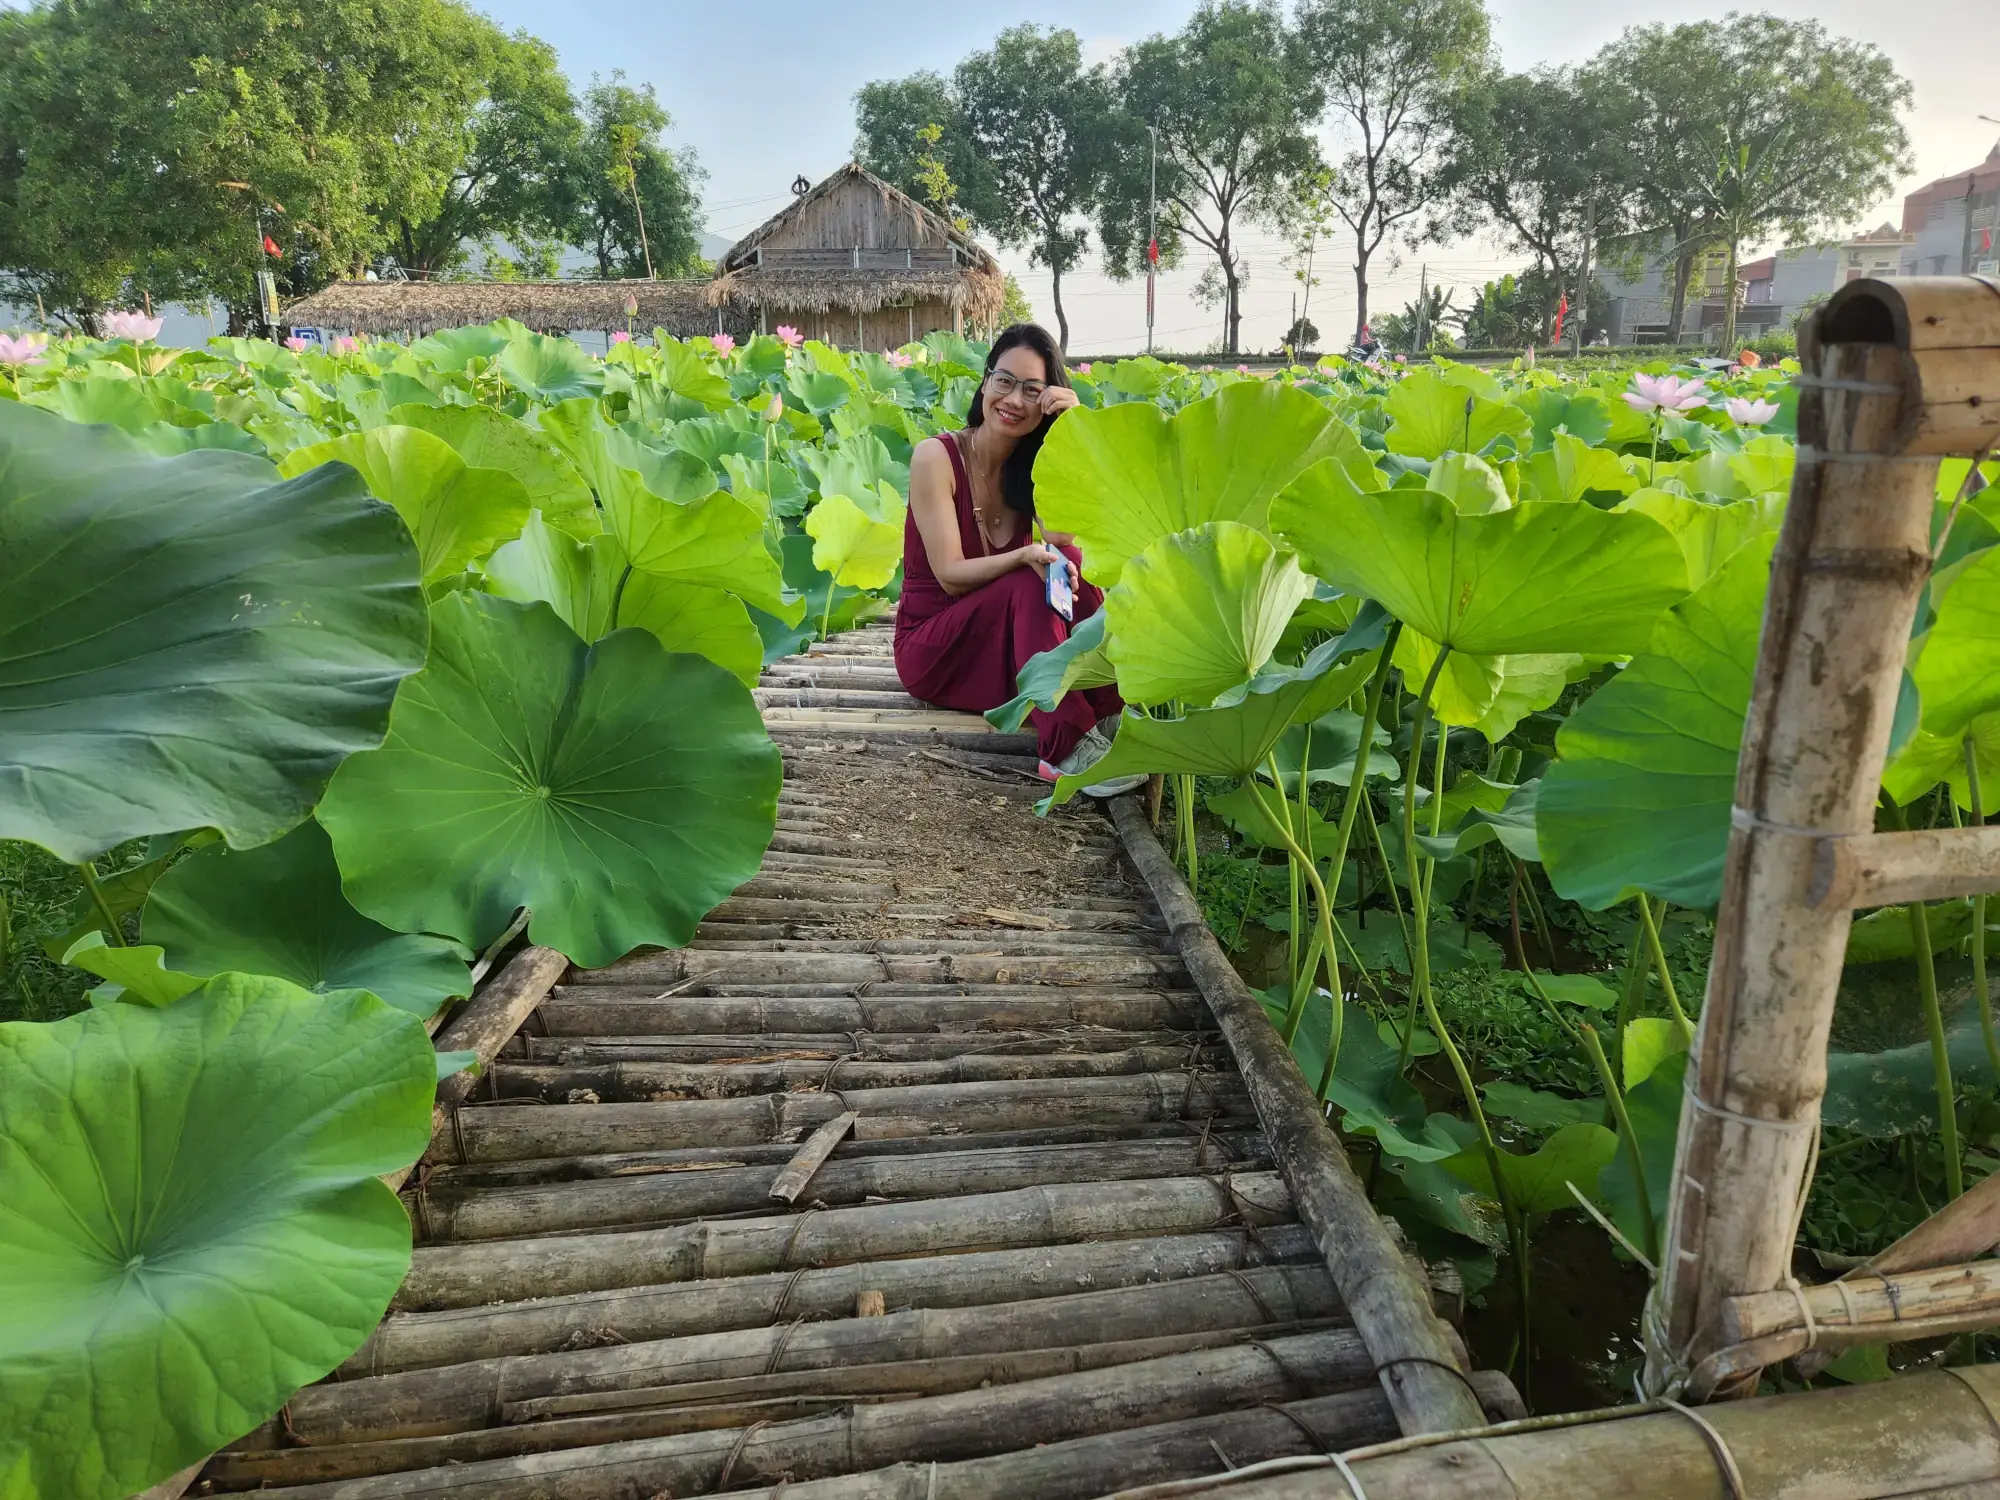 Lotus flower field